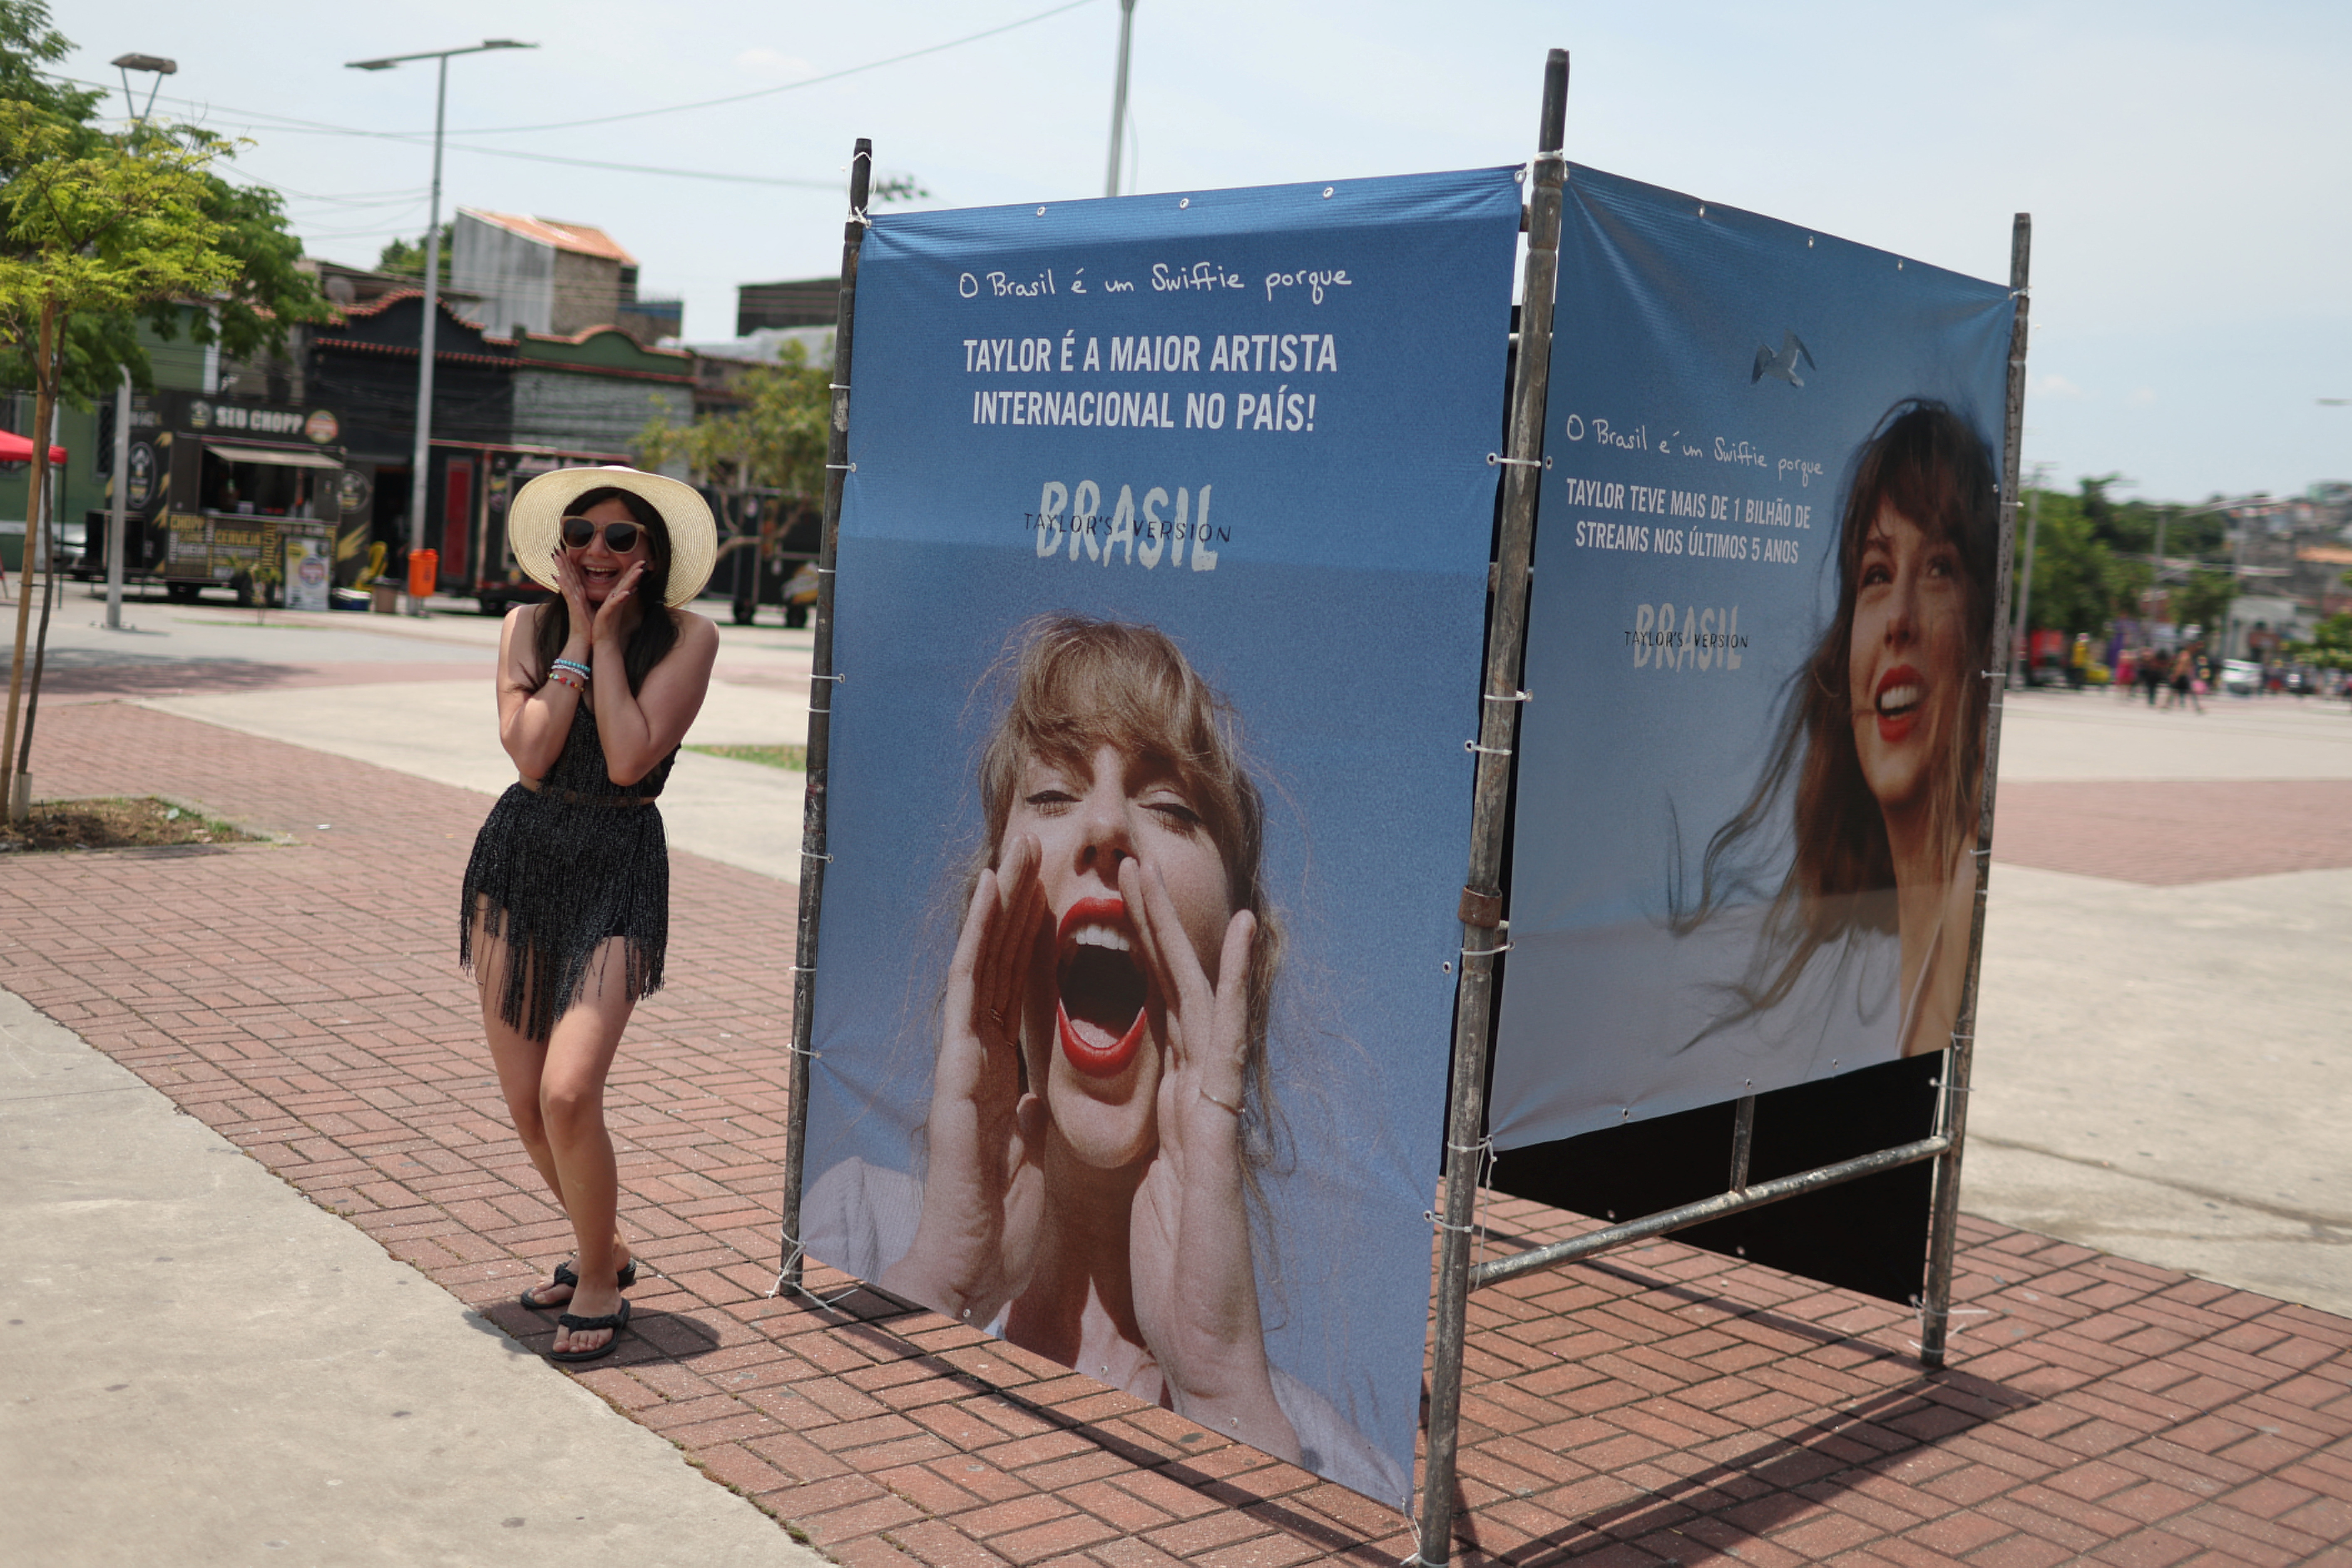 Taylor Swift postpones scorching Rio de Janeiro show after fan's